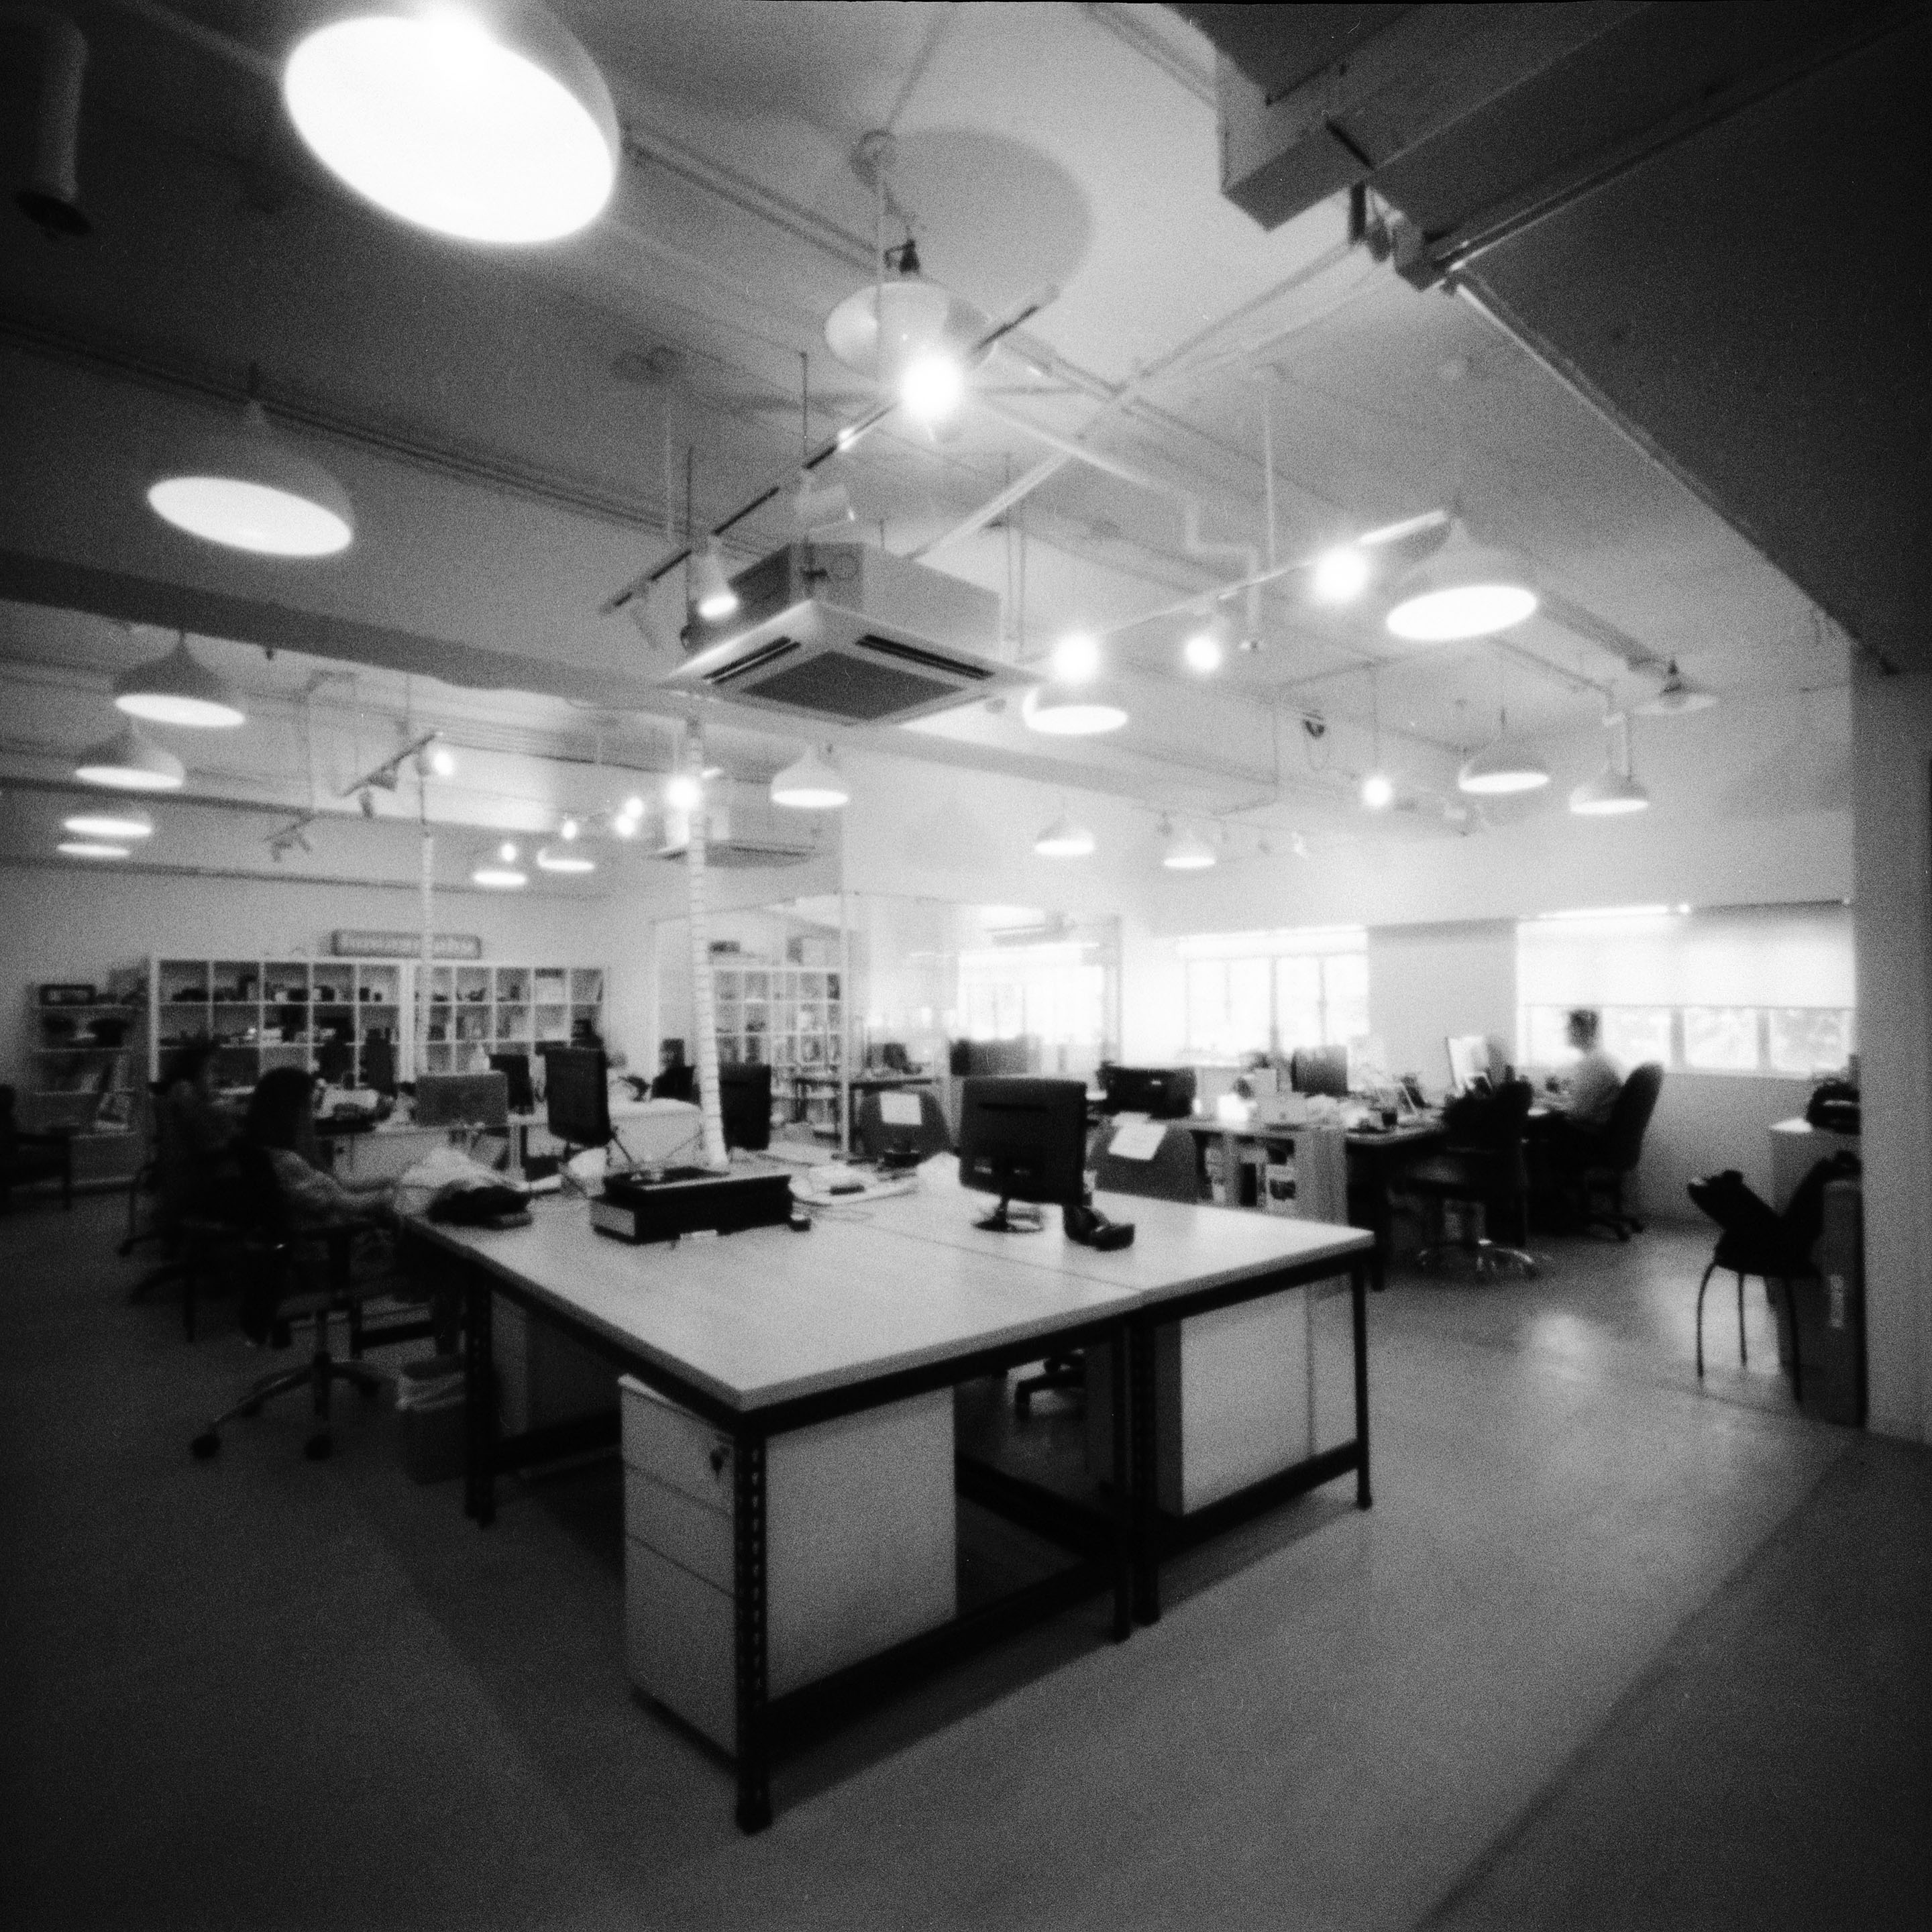 img/2006-hongkong-lomography-office-work-zero200-lomography-400bw/tat-tso-2006-hongkong-lomography-office-work-zero200-lomography-400bw-03.jpg